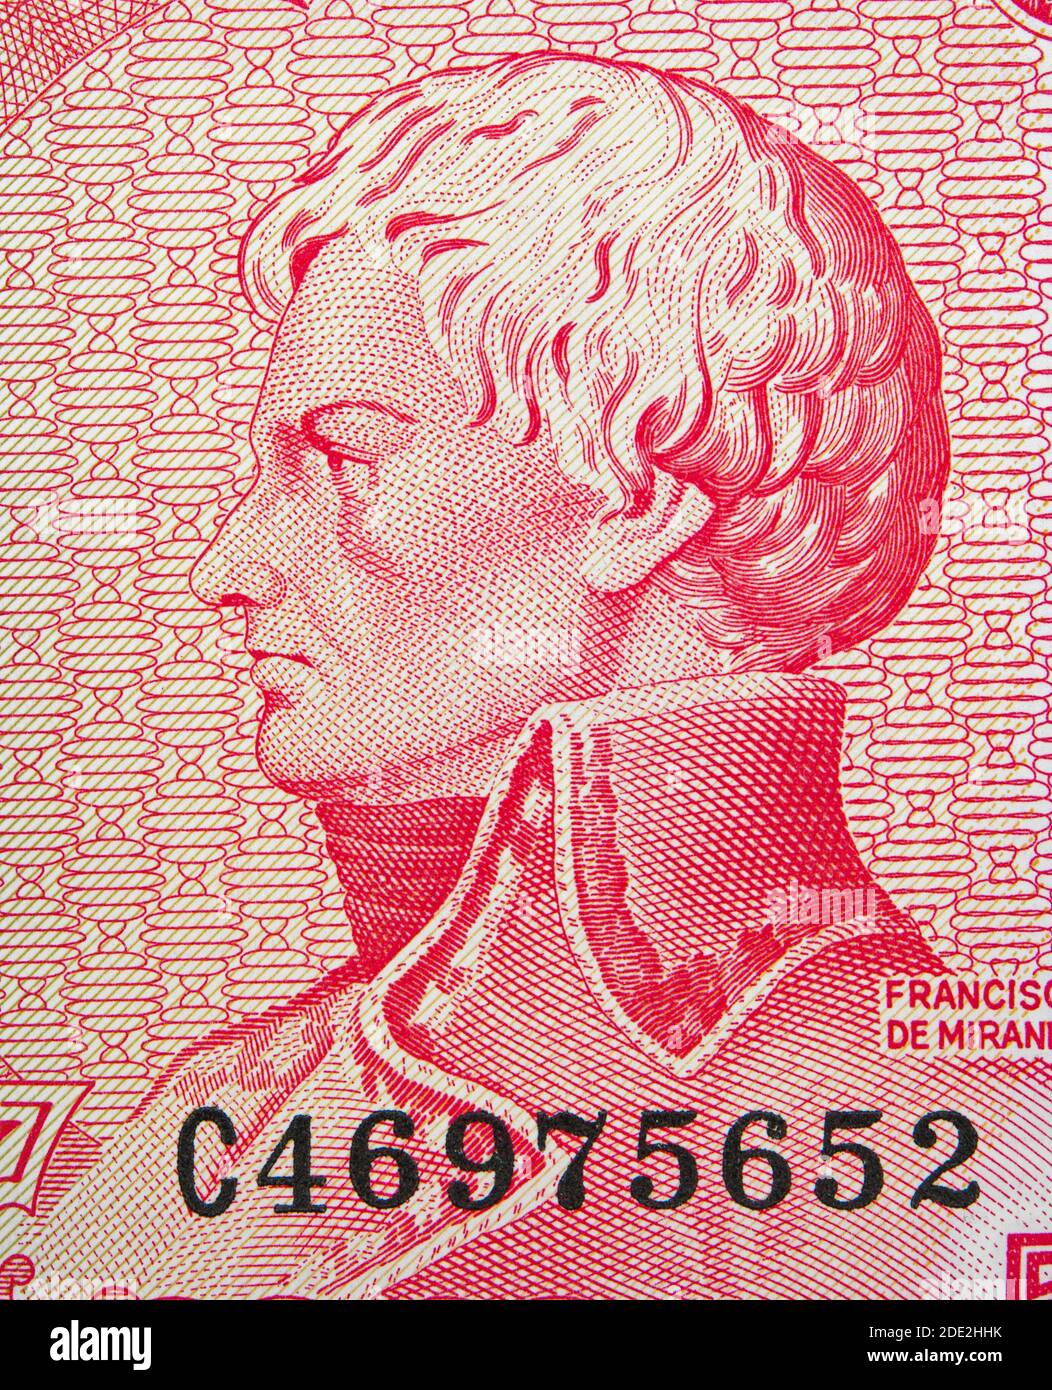 Francisco de Miranda (1750-1816) portrait on Venezuela 5 bolivares (1989) banknote, Venezuelan money closeup. Stock Photo